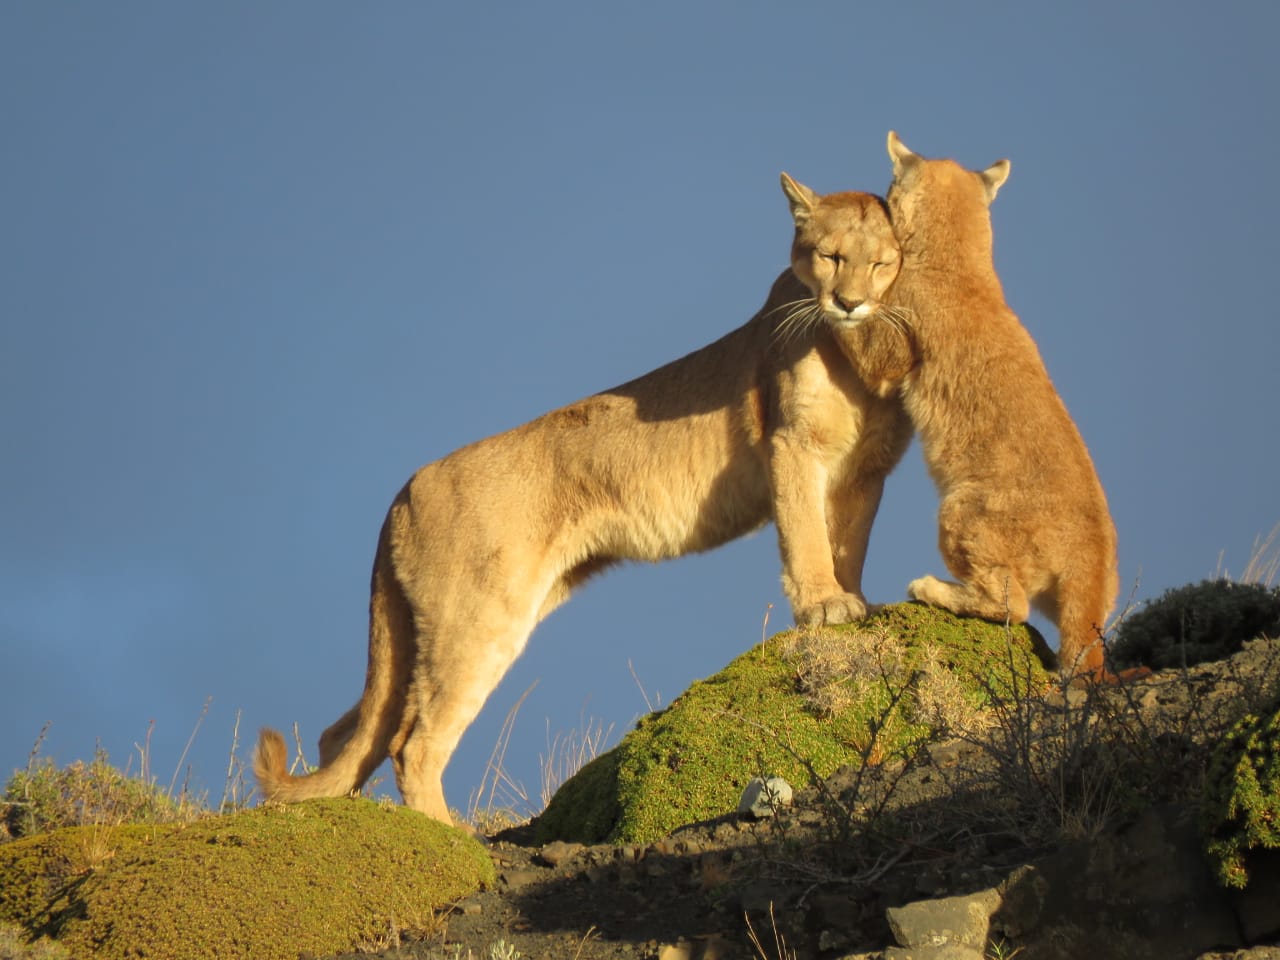 Patagonian Puma cat, Chile - 10 fun facts